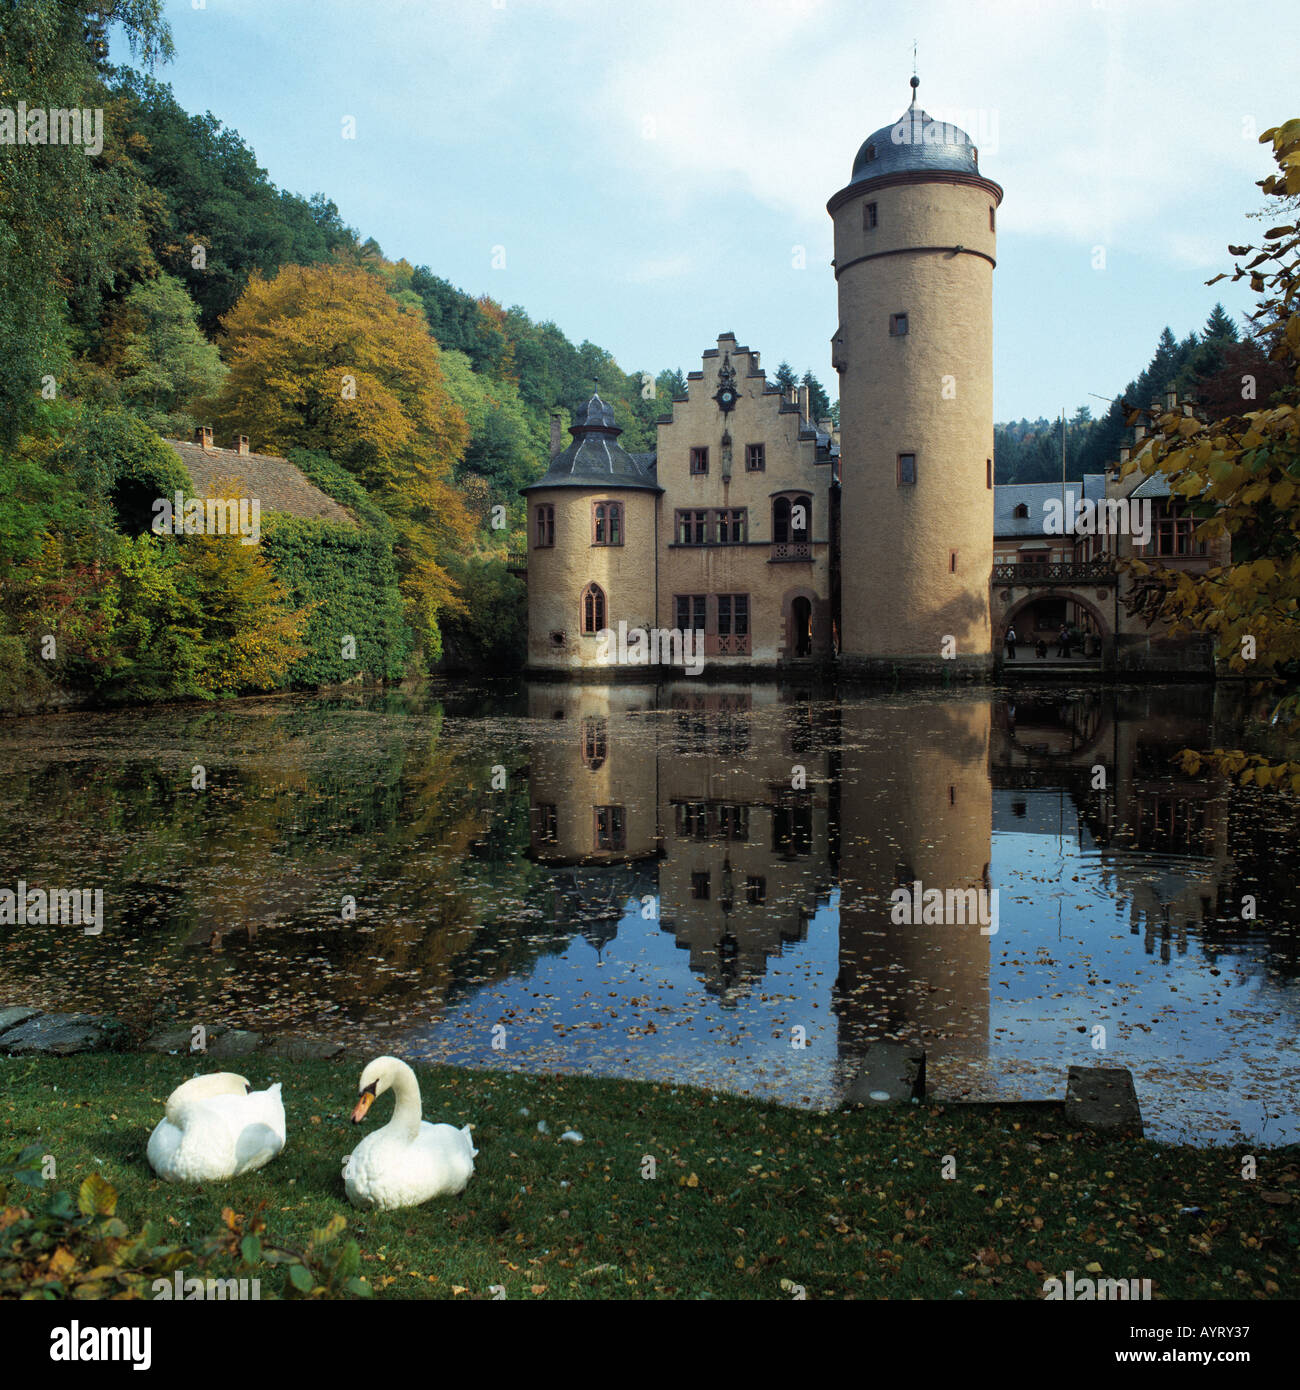 Wasserschloss Mespelbrunn, zwei Schwaene am Teichufer, Herbstlaub auf dem Wasser, Mespelbrunn, Naturpark Bayerischer Spessart, Unterfranken, Bayern Stock Photo